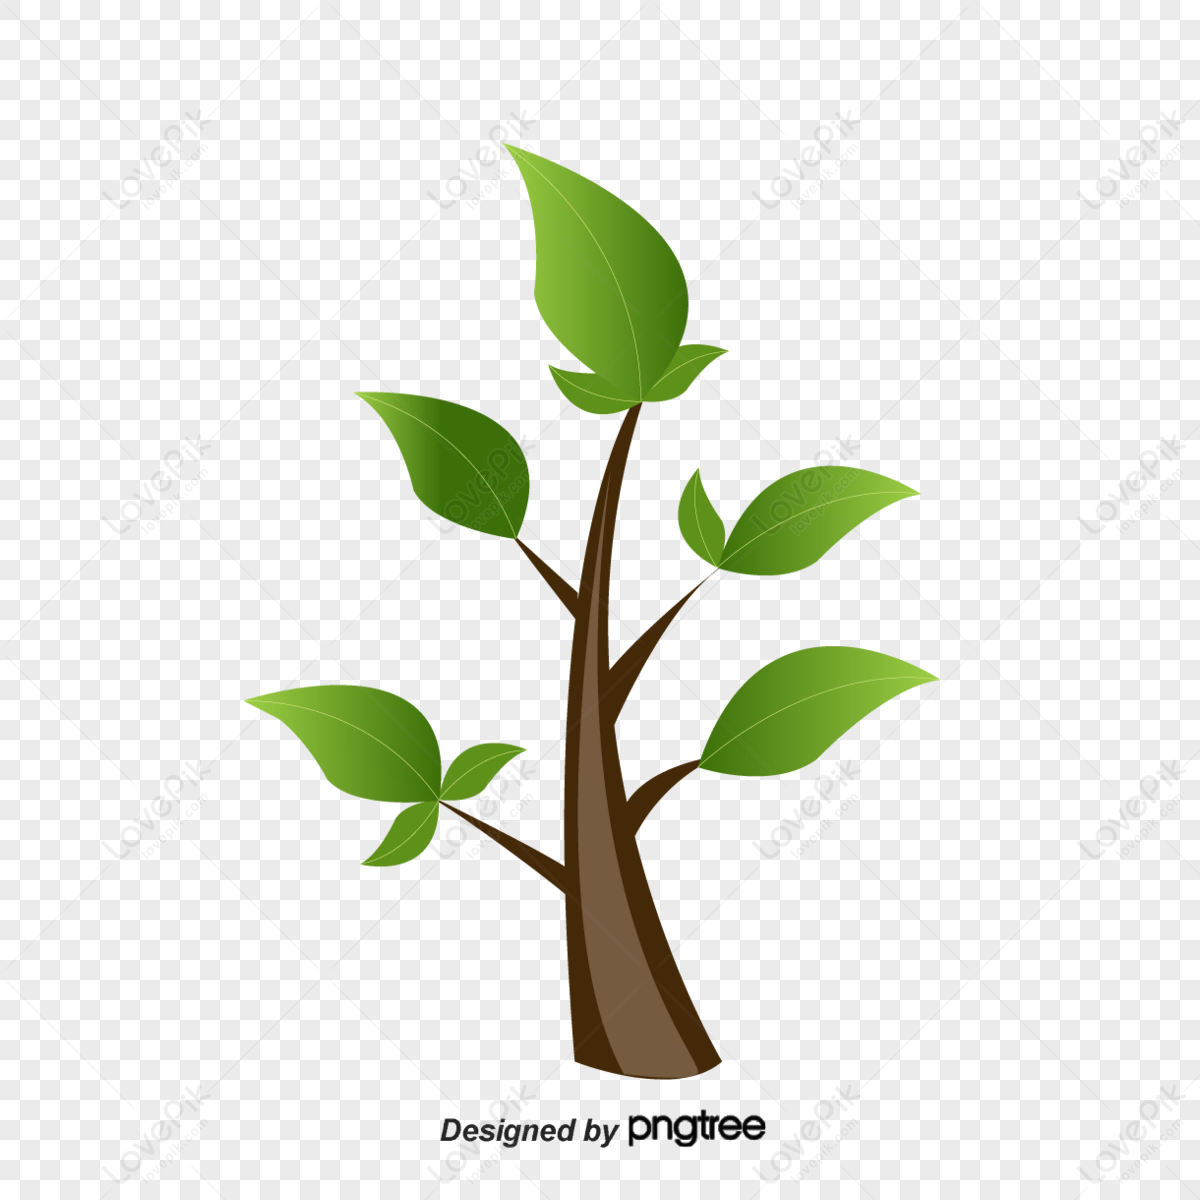 Human Tree Logo Symbol Design Illustration Royalty Free SVG, Cliparts,  Vectors, and Stock Illustration. Image 92134228.